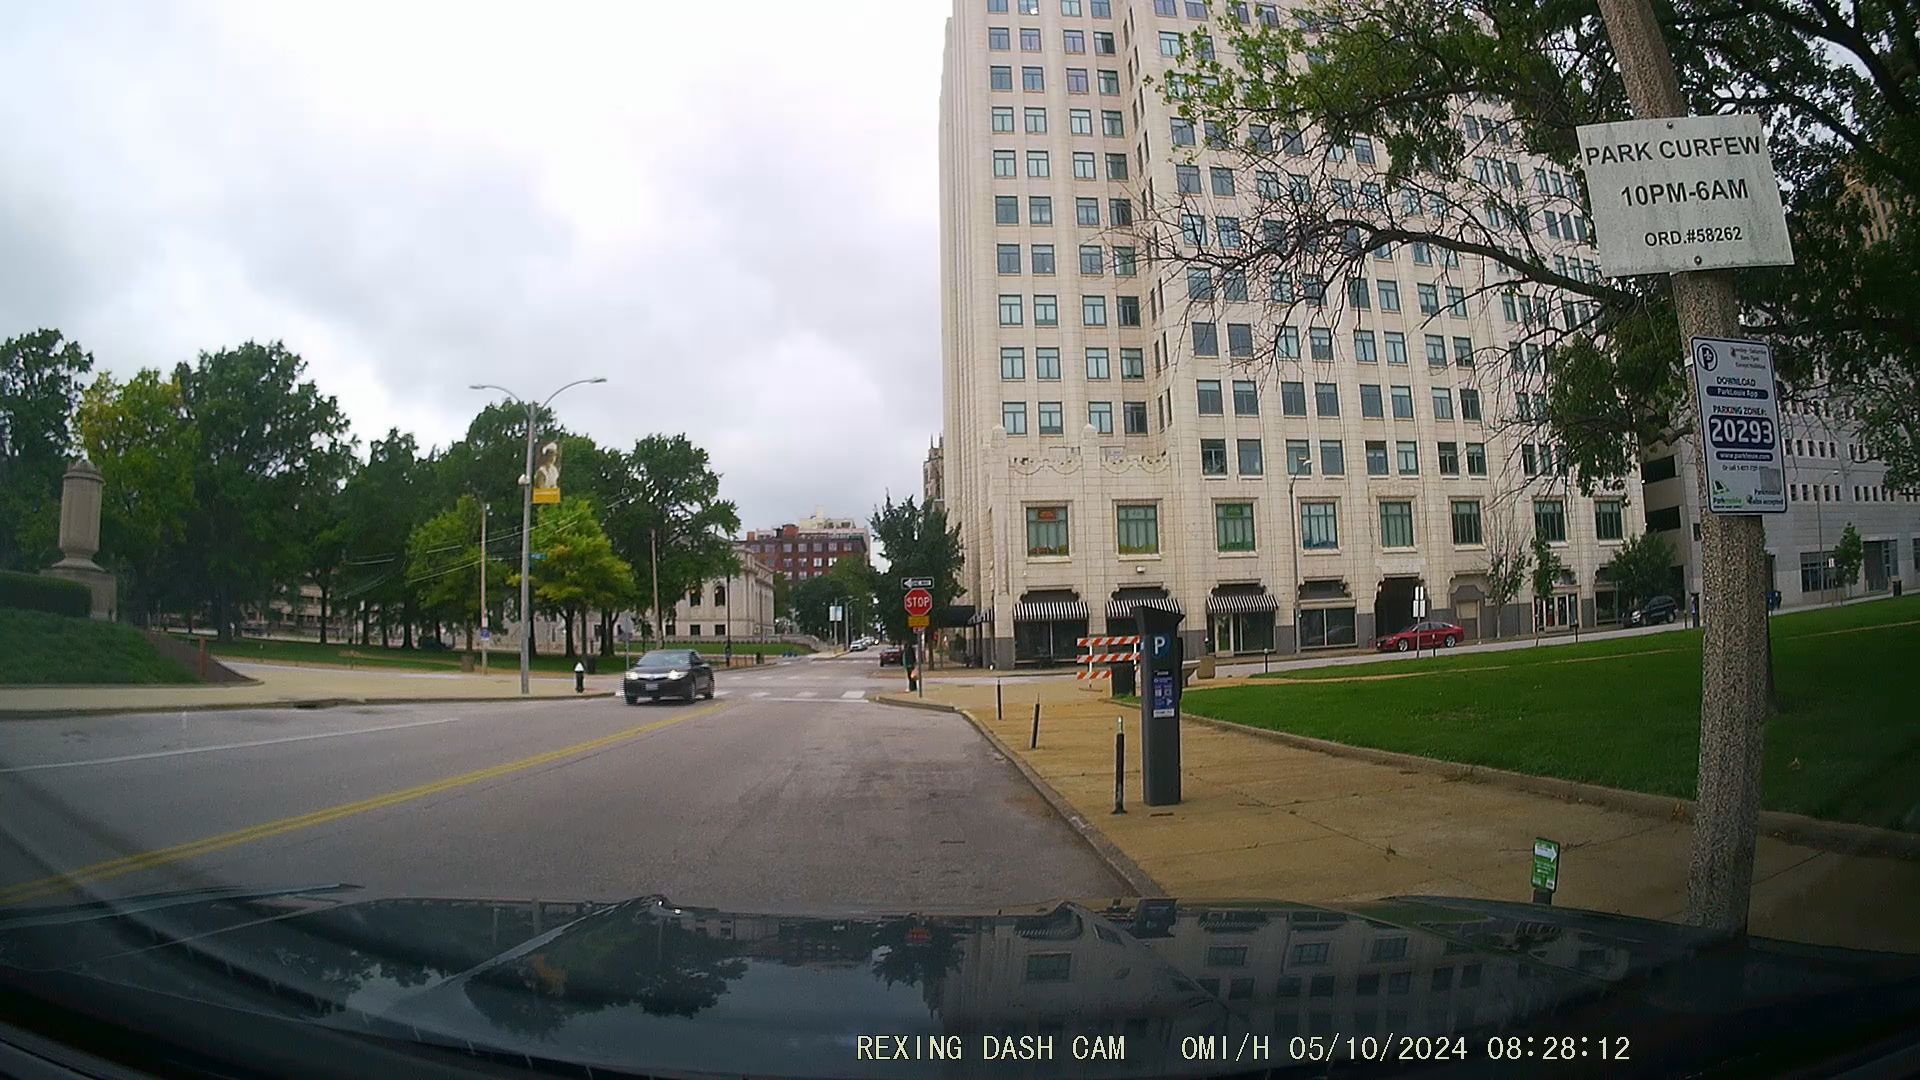 Aaron Laxton was in downtown St. Louis when he heard gunshots. His dashcam was recording.